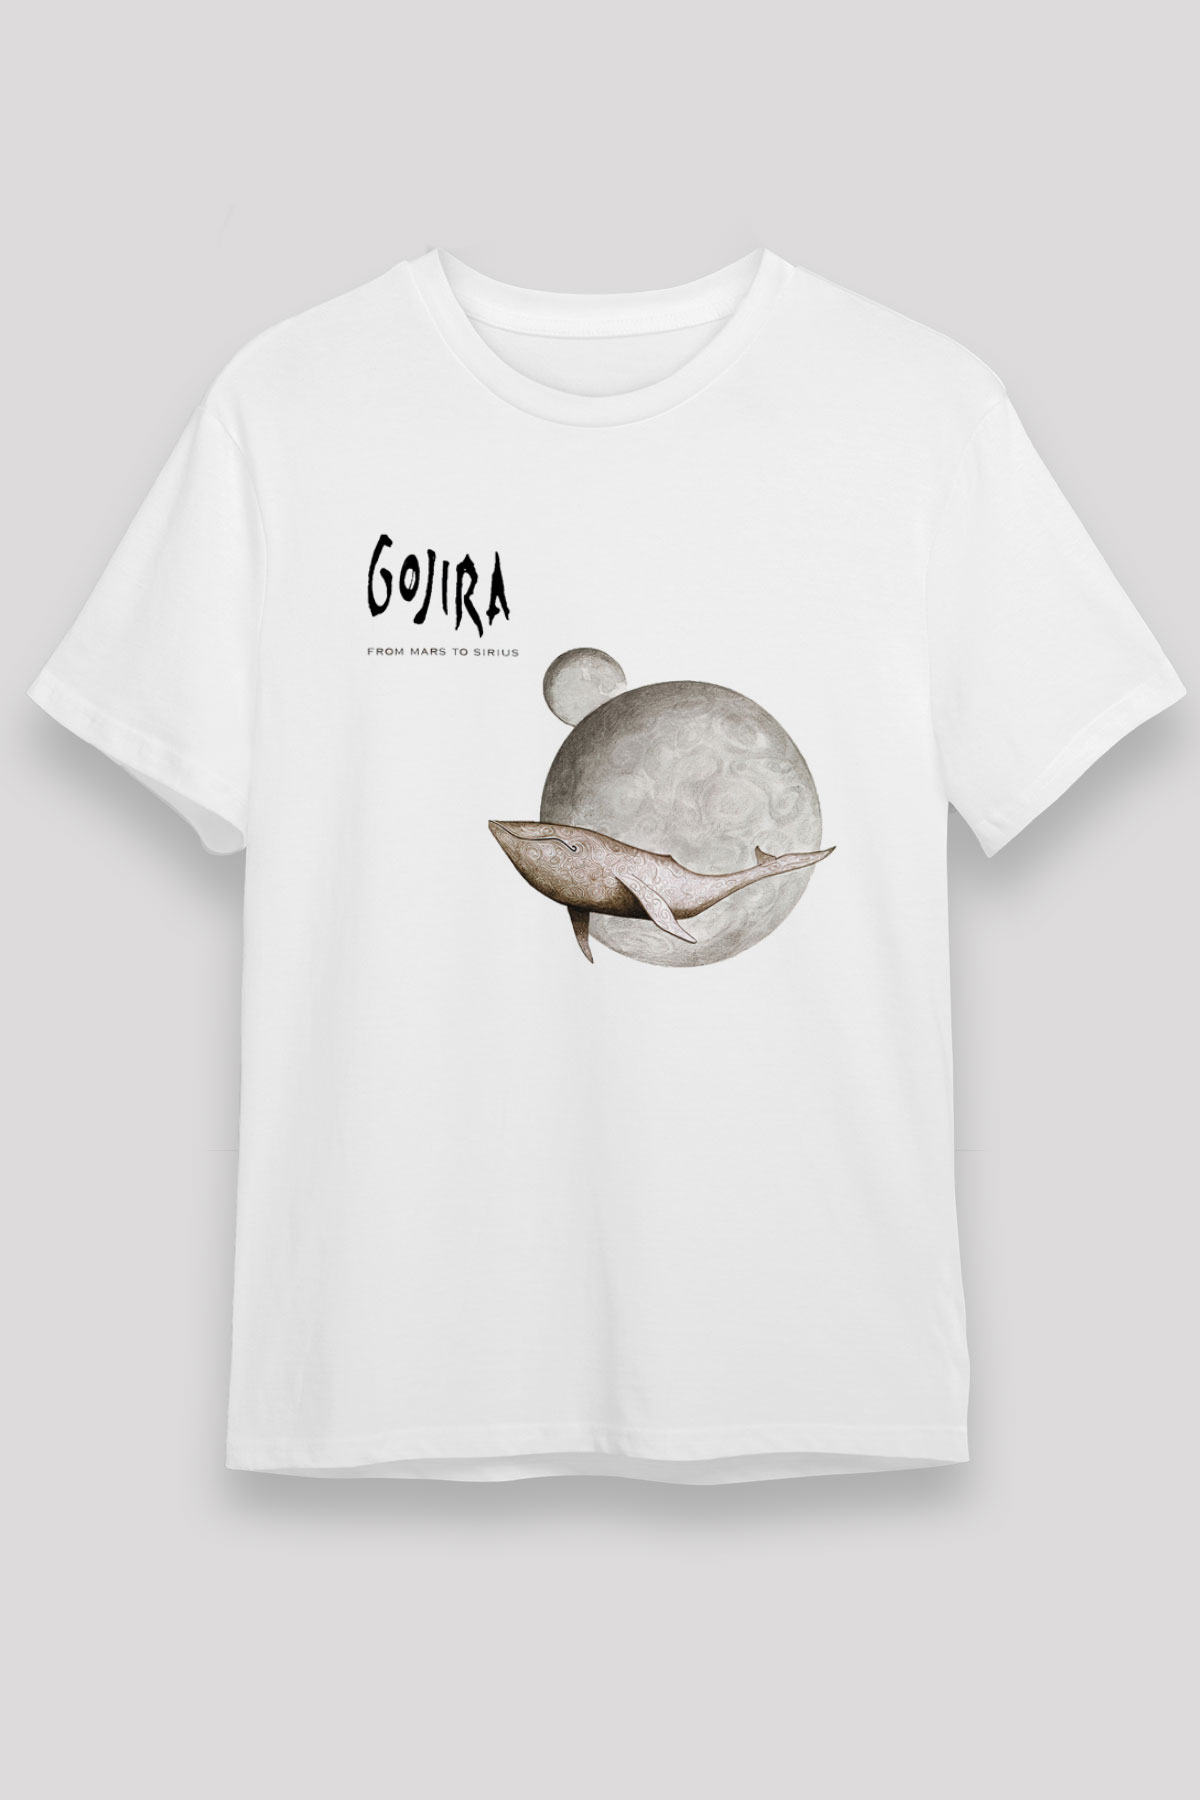 Gojira Beyaz Unisex Tişört T-Shirt - TişörtFabrikası